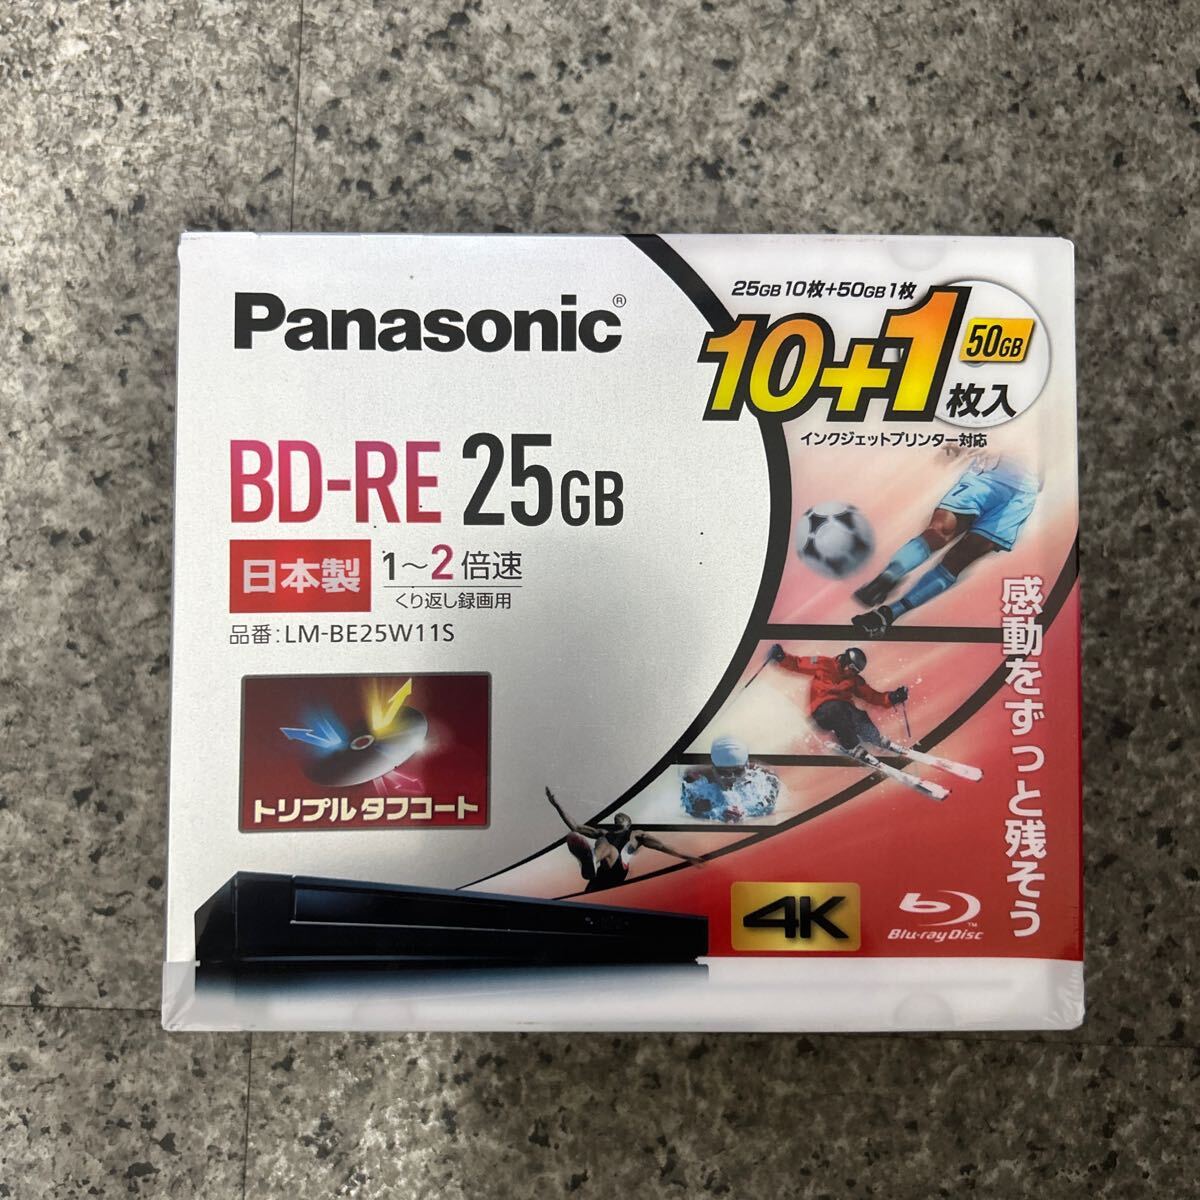 Panasonic Panasonic BD-RE 25GB10 листов +50GB1 листов LM-BE25W11S